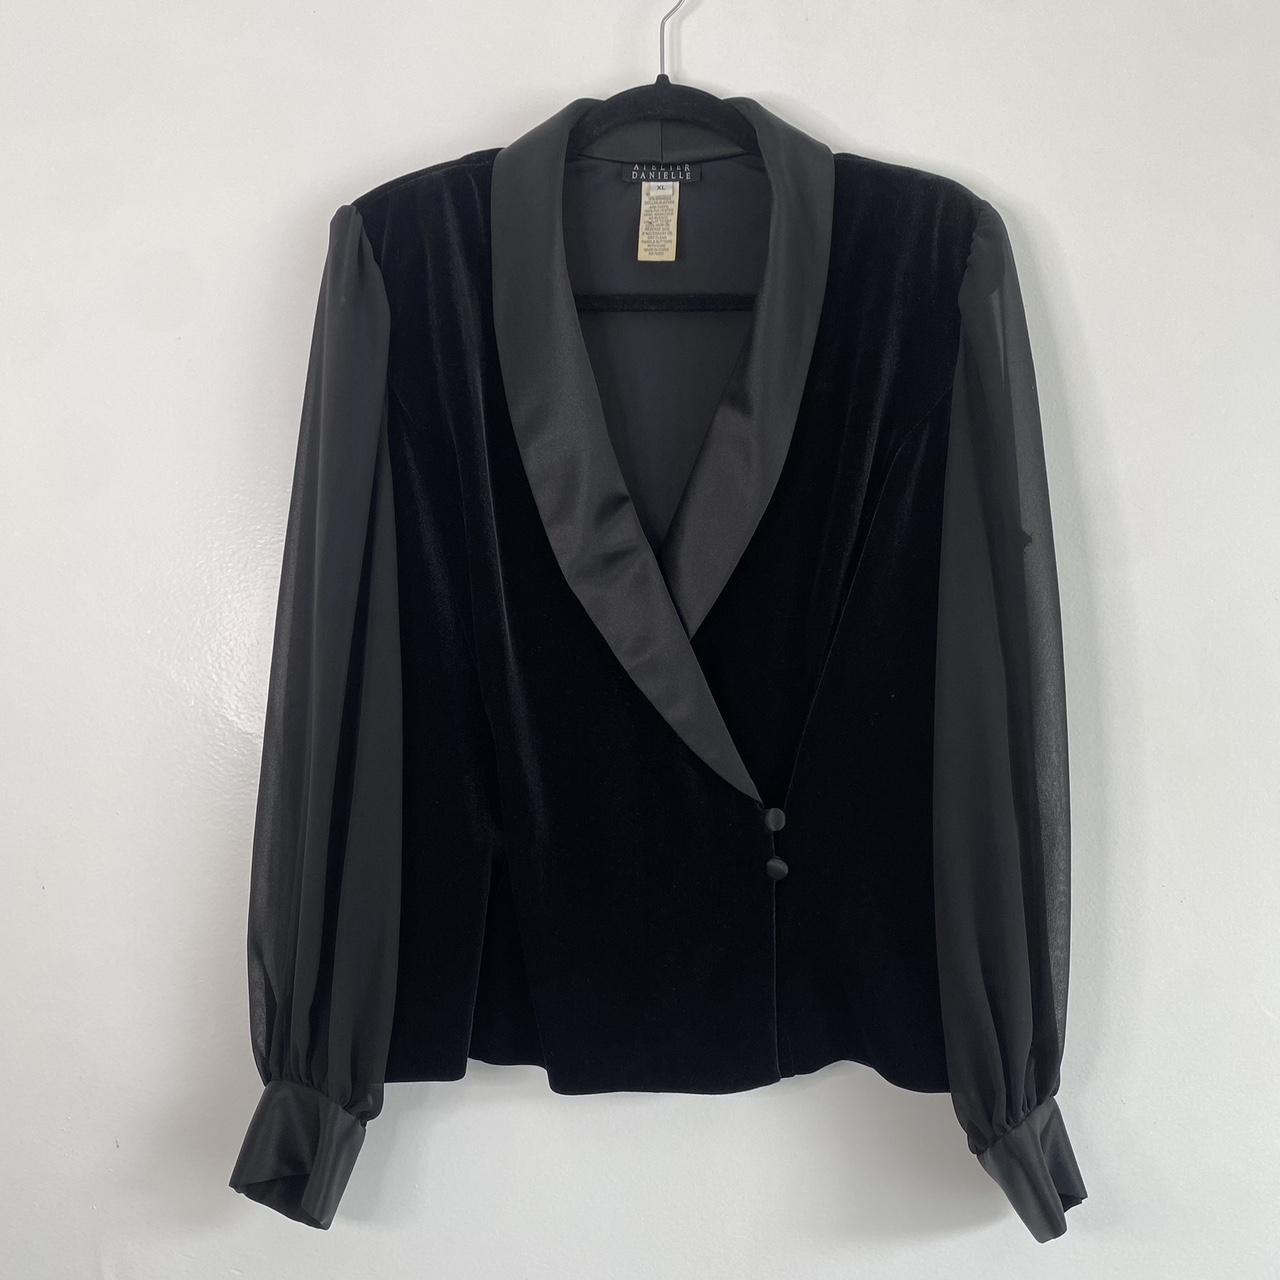 Vintage Women's Tailored Jacket - Black - XL